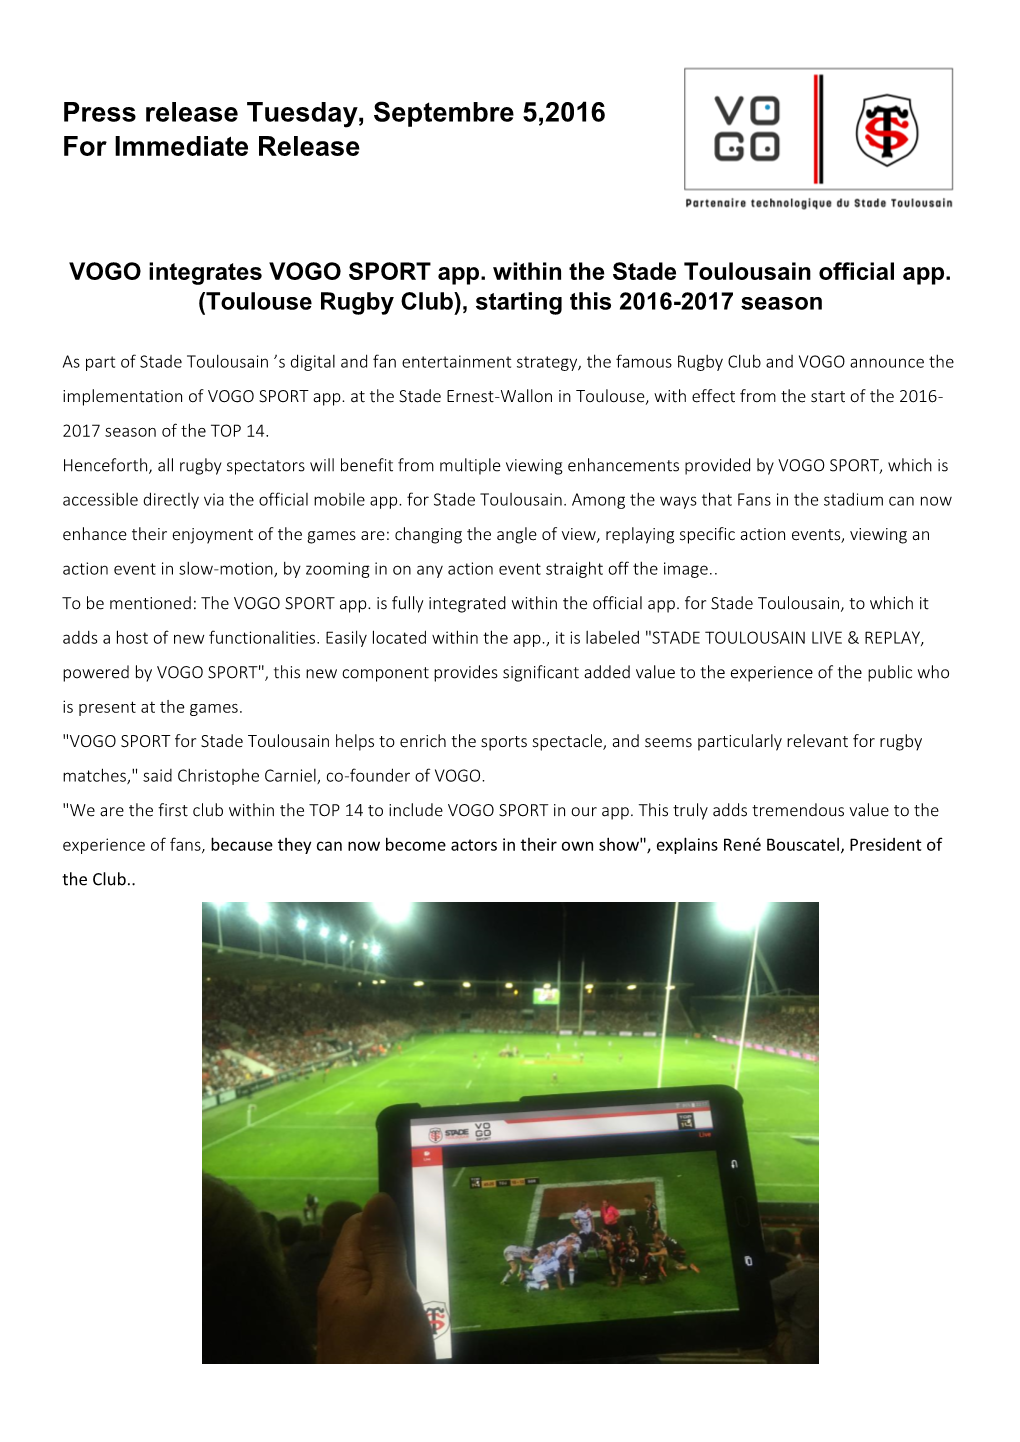 VOGO Integrates VOGO SPORT App. Within the Stade Toulousain Official App